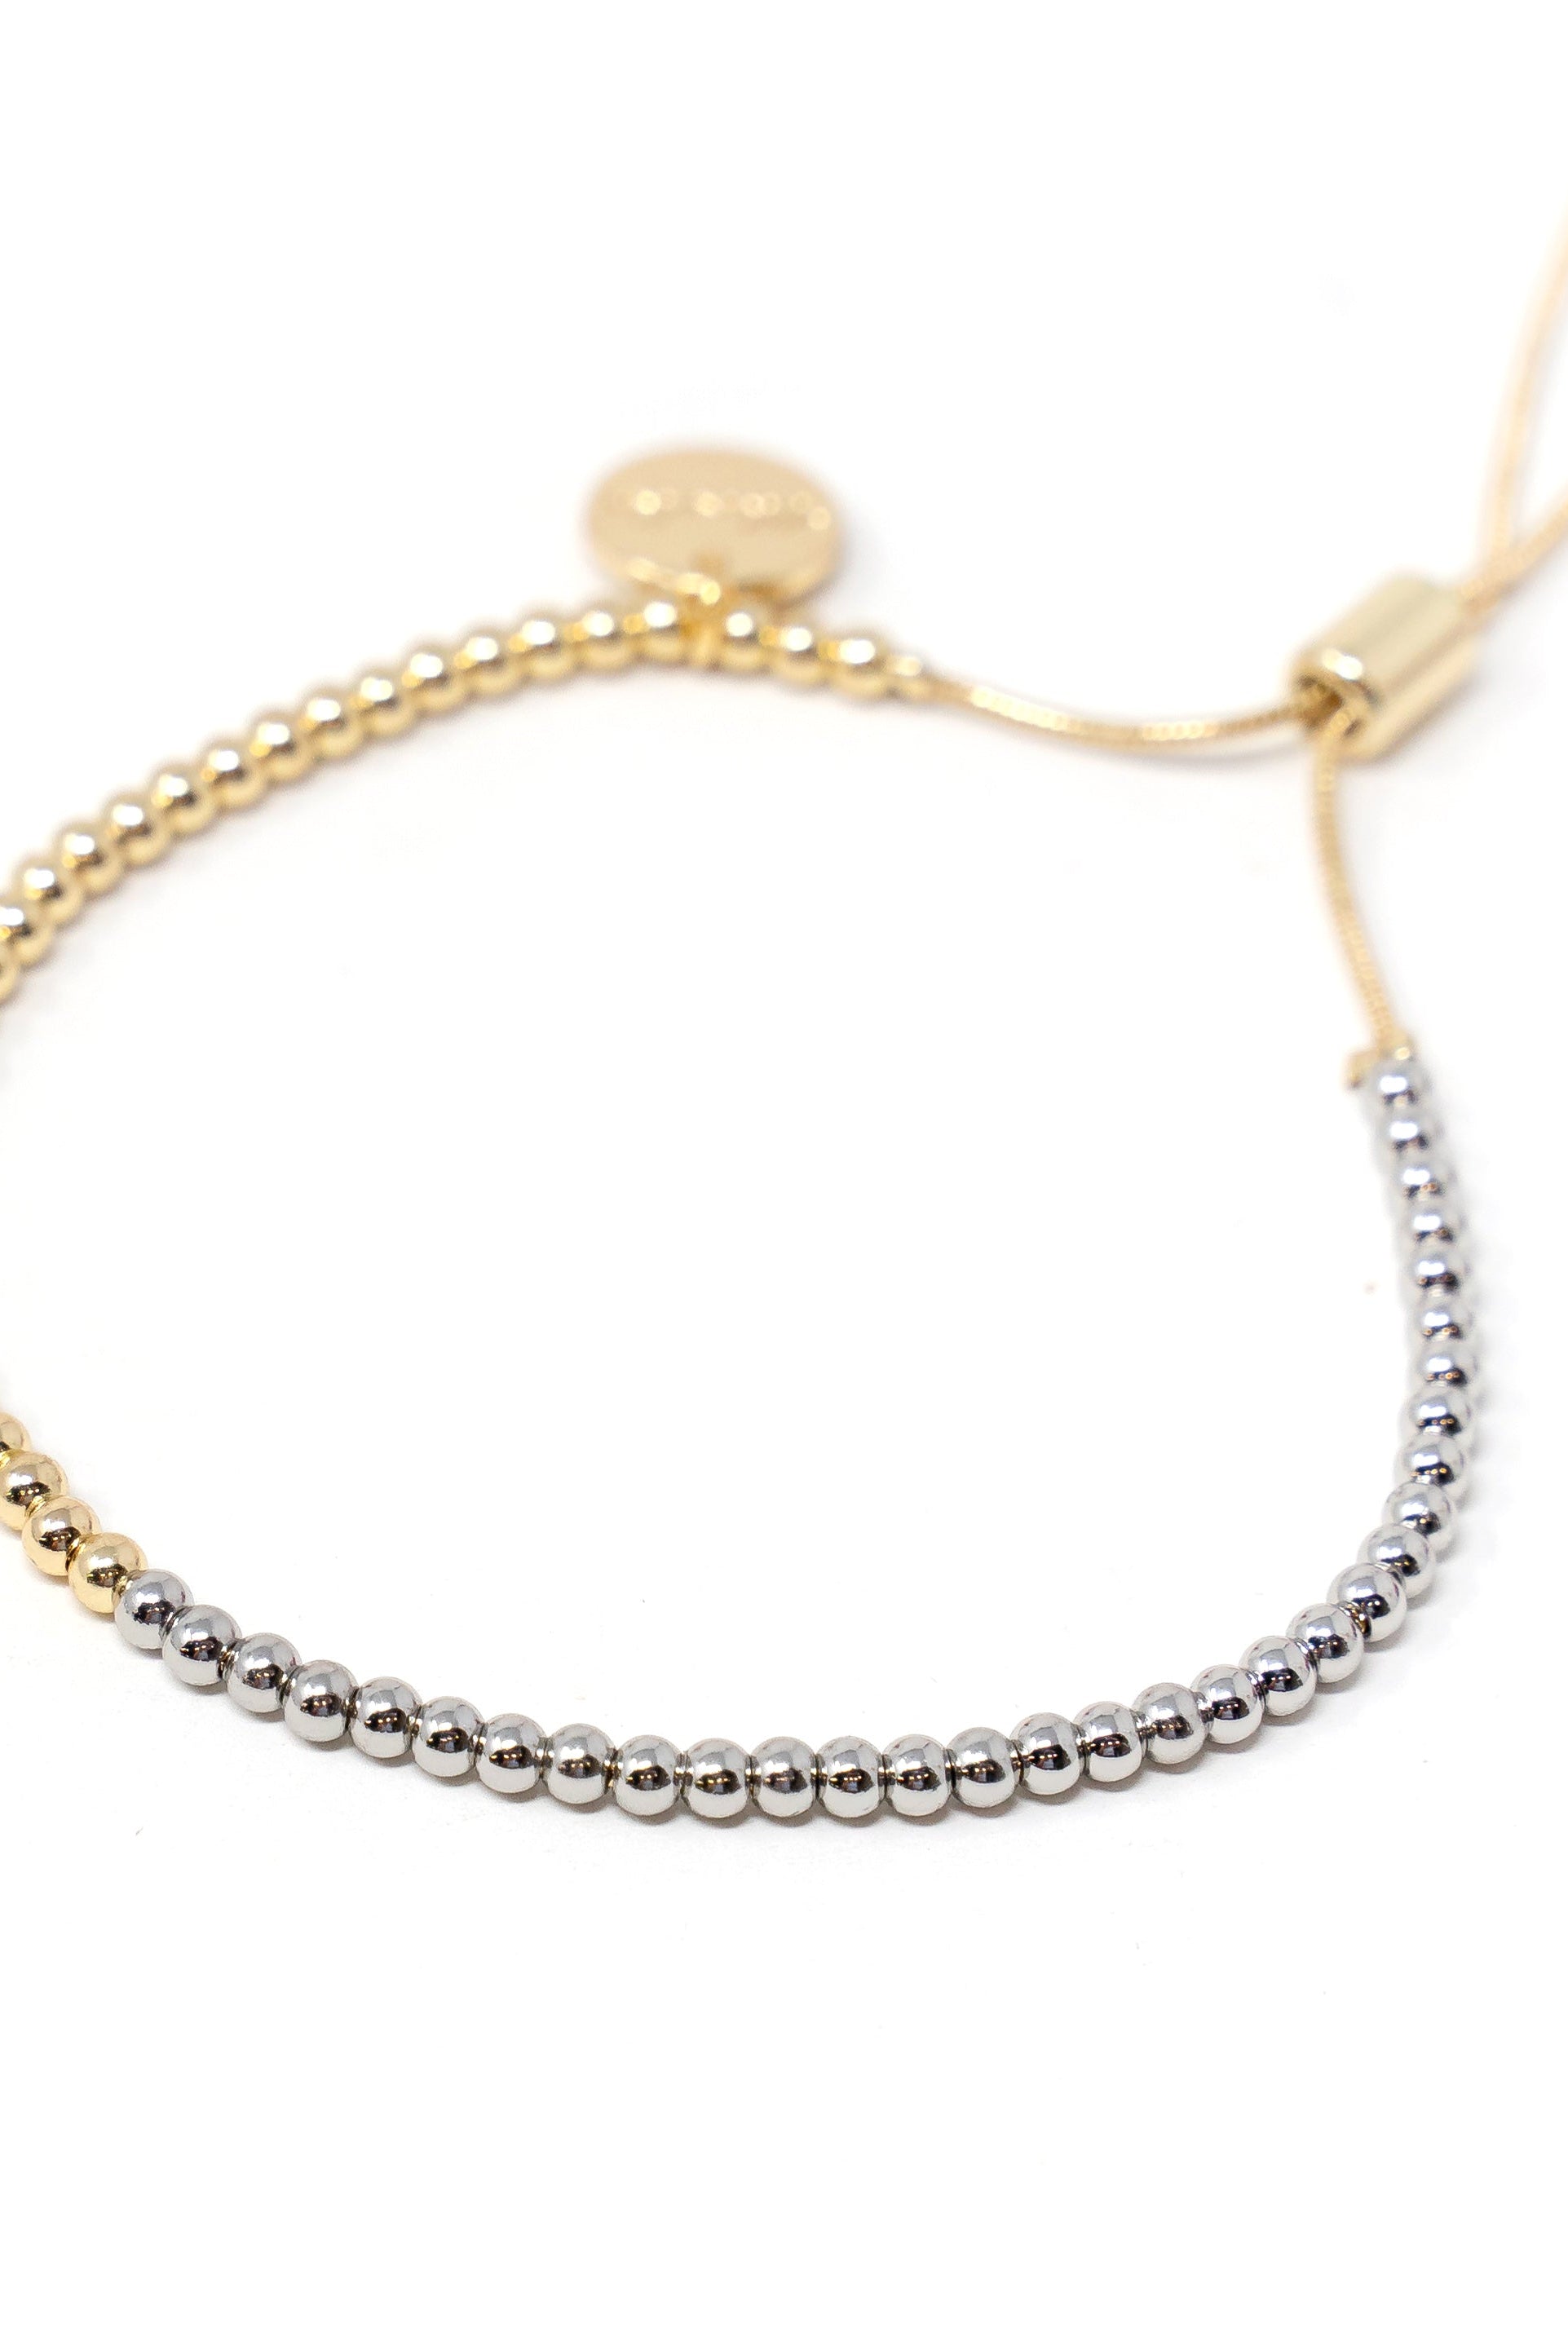 Two Tone Adjustable Bracelet in 3mm-Bracelets-The Sis Kiss®-Urban Threadz Boutique, Women's Fashion Boutique in Saugatuck, MI